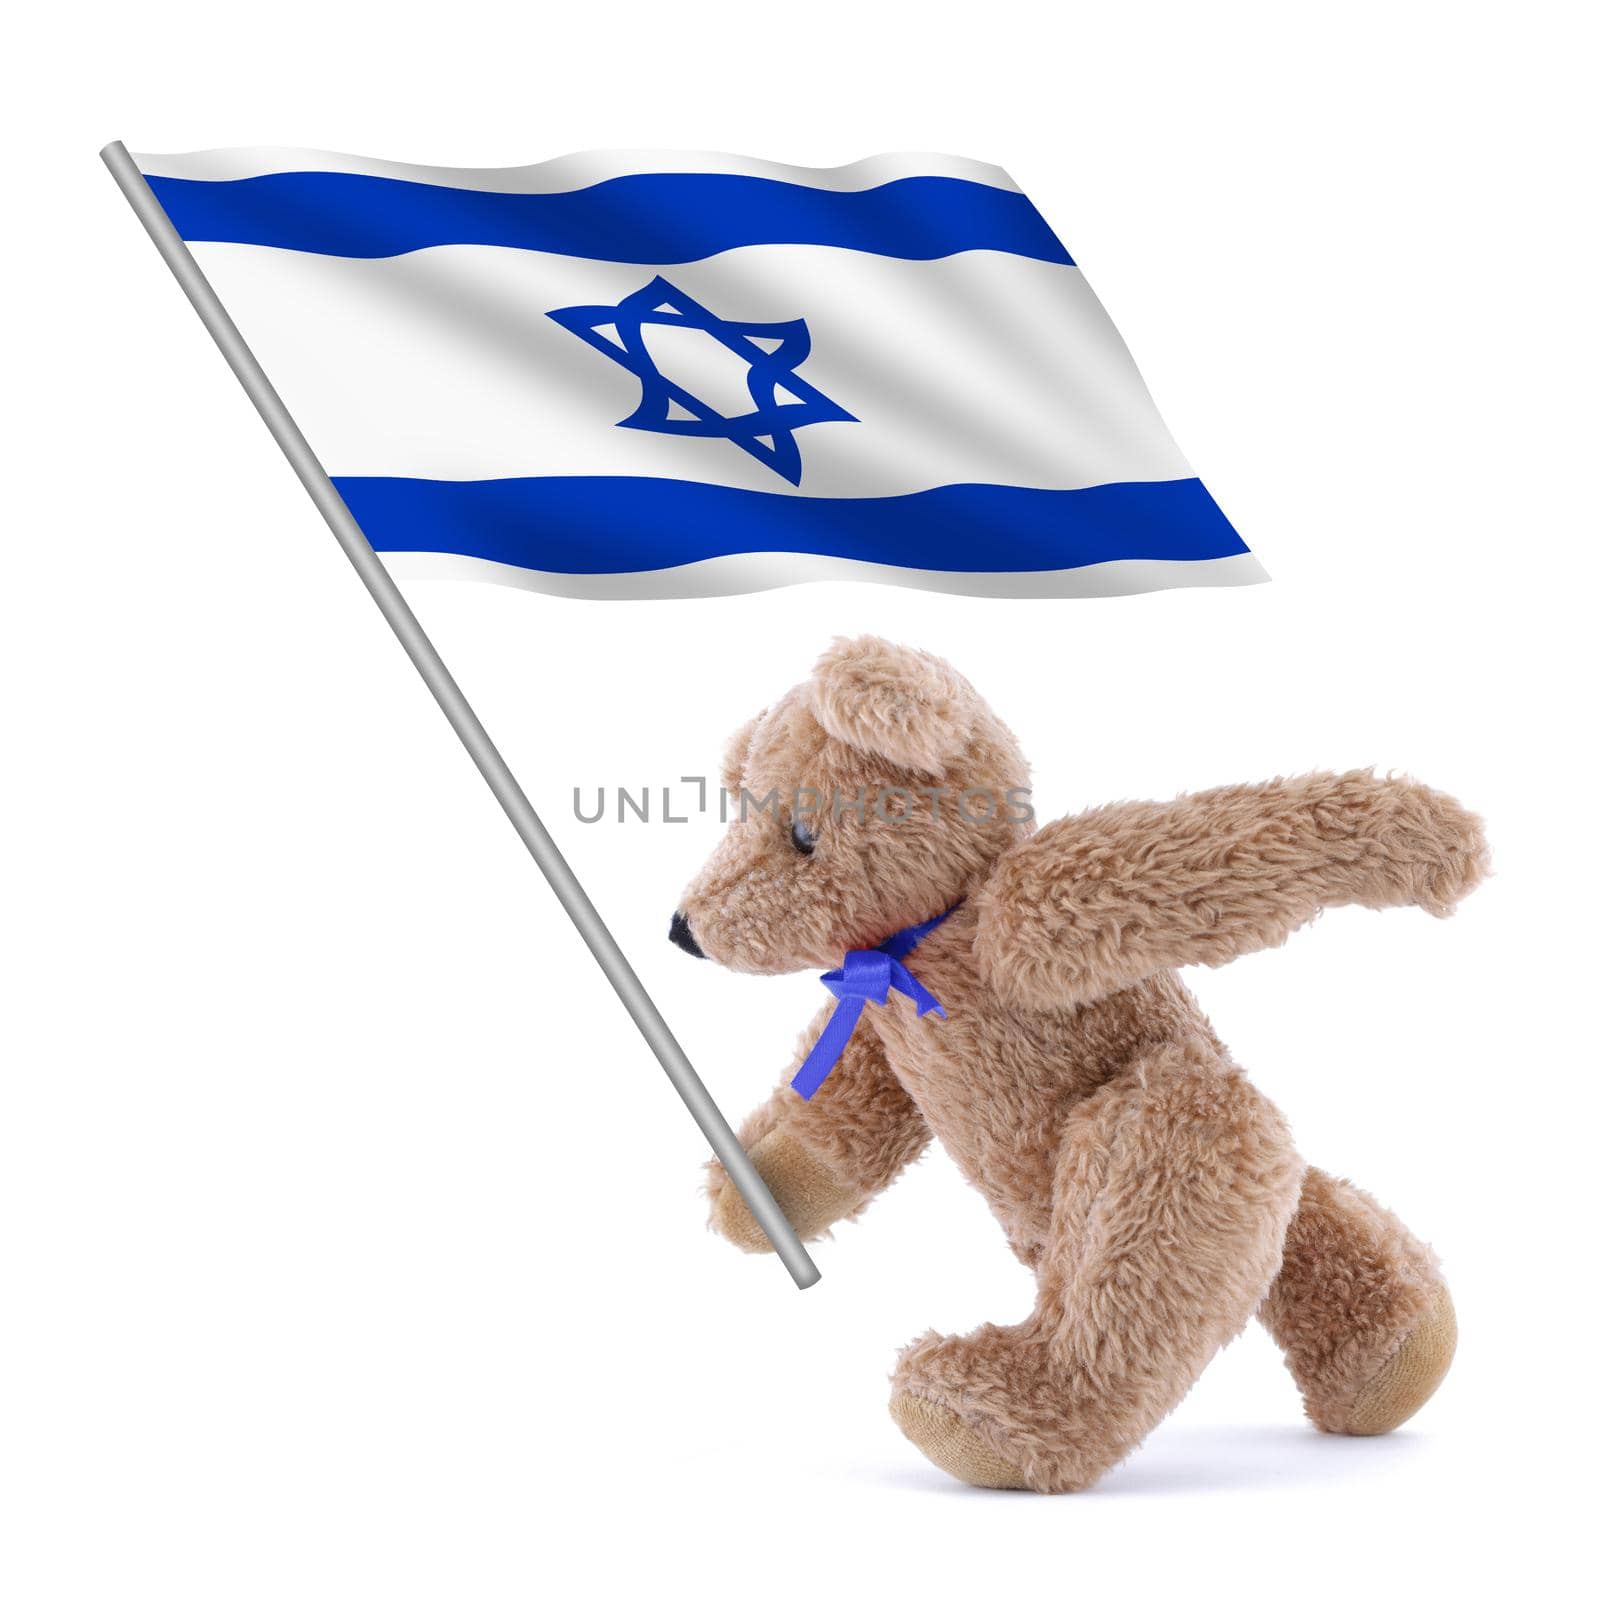 An Israel flag being carried by a cute teddy bear